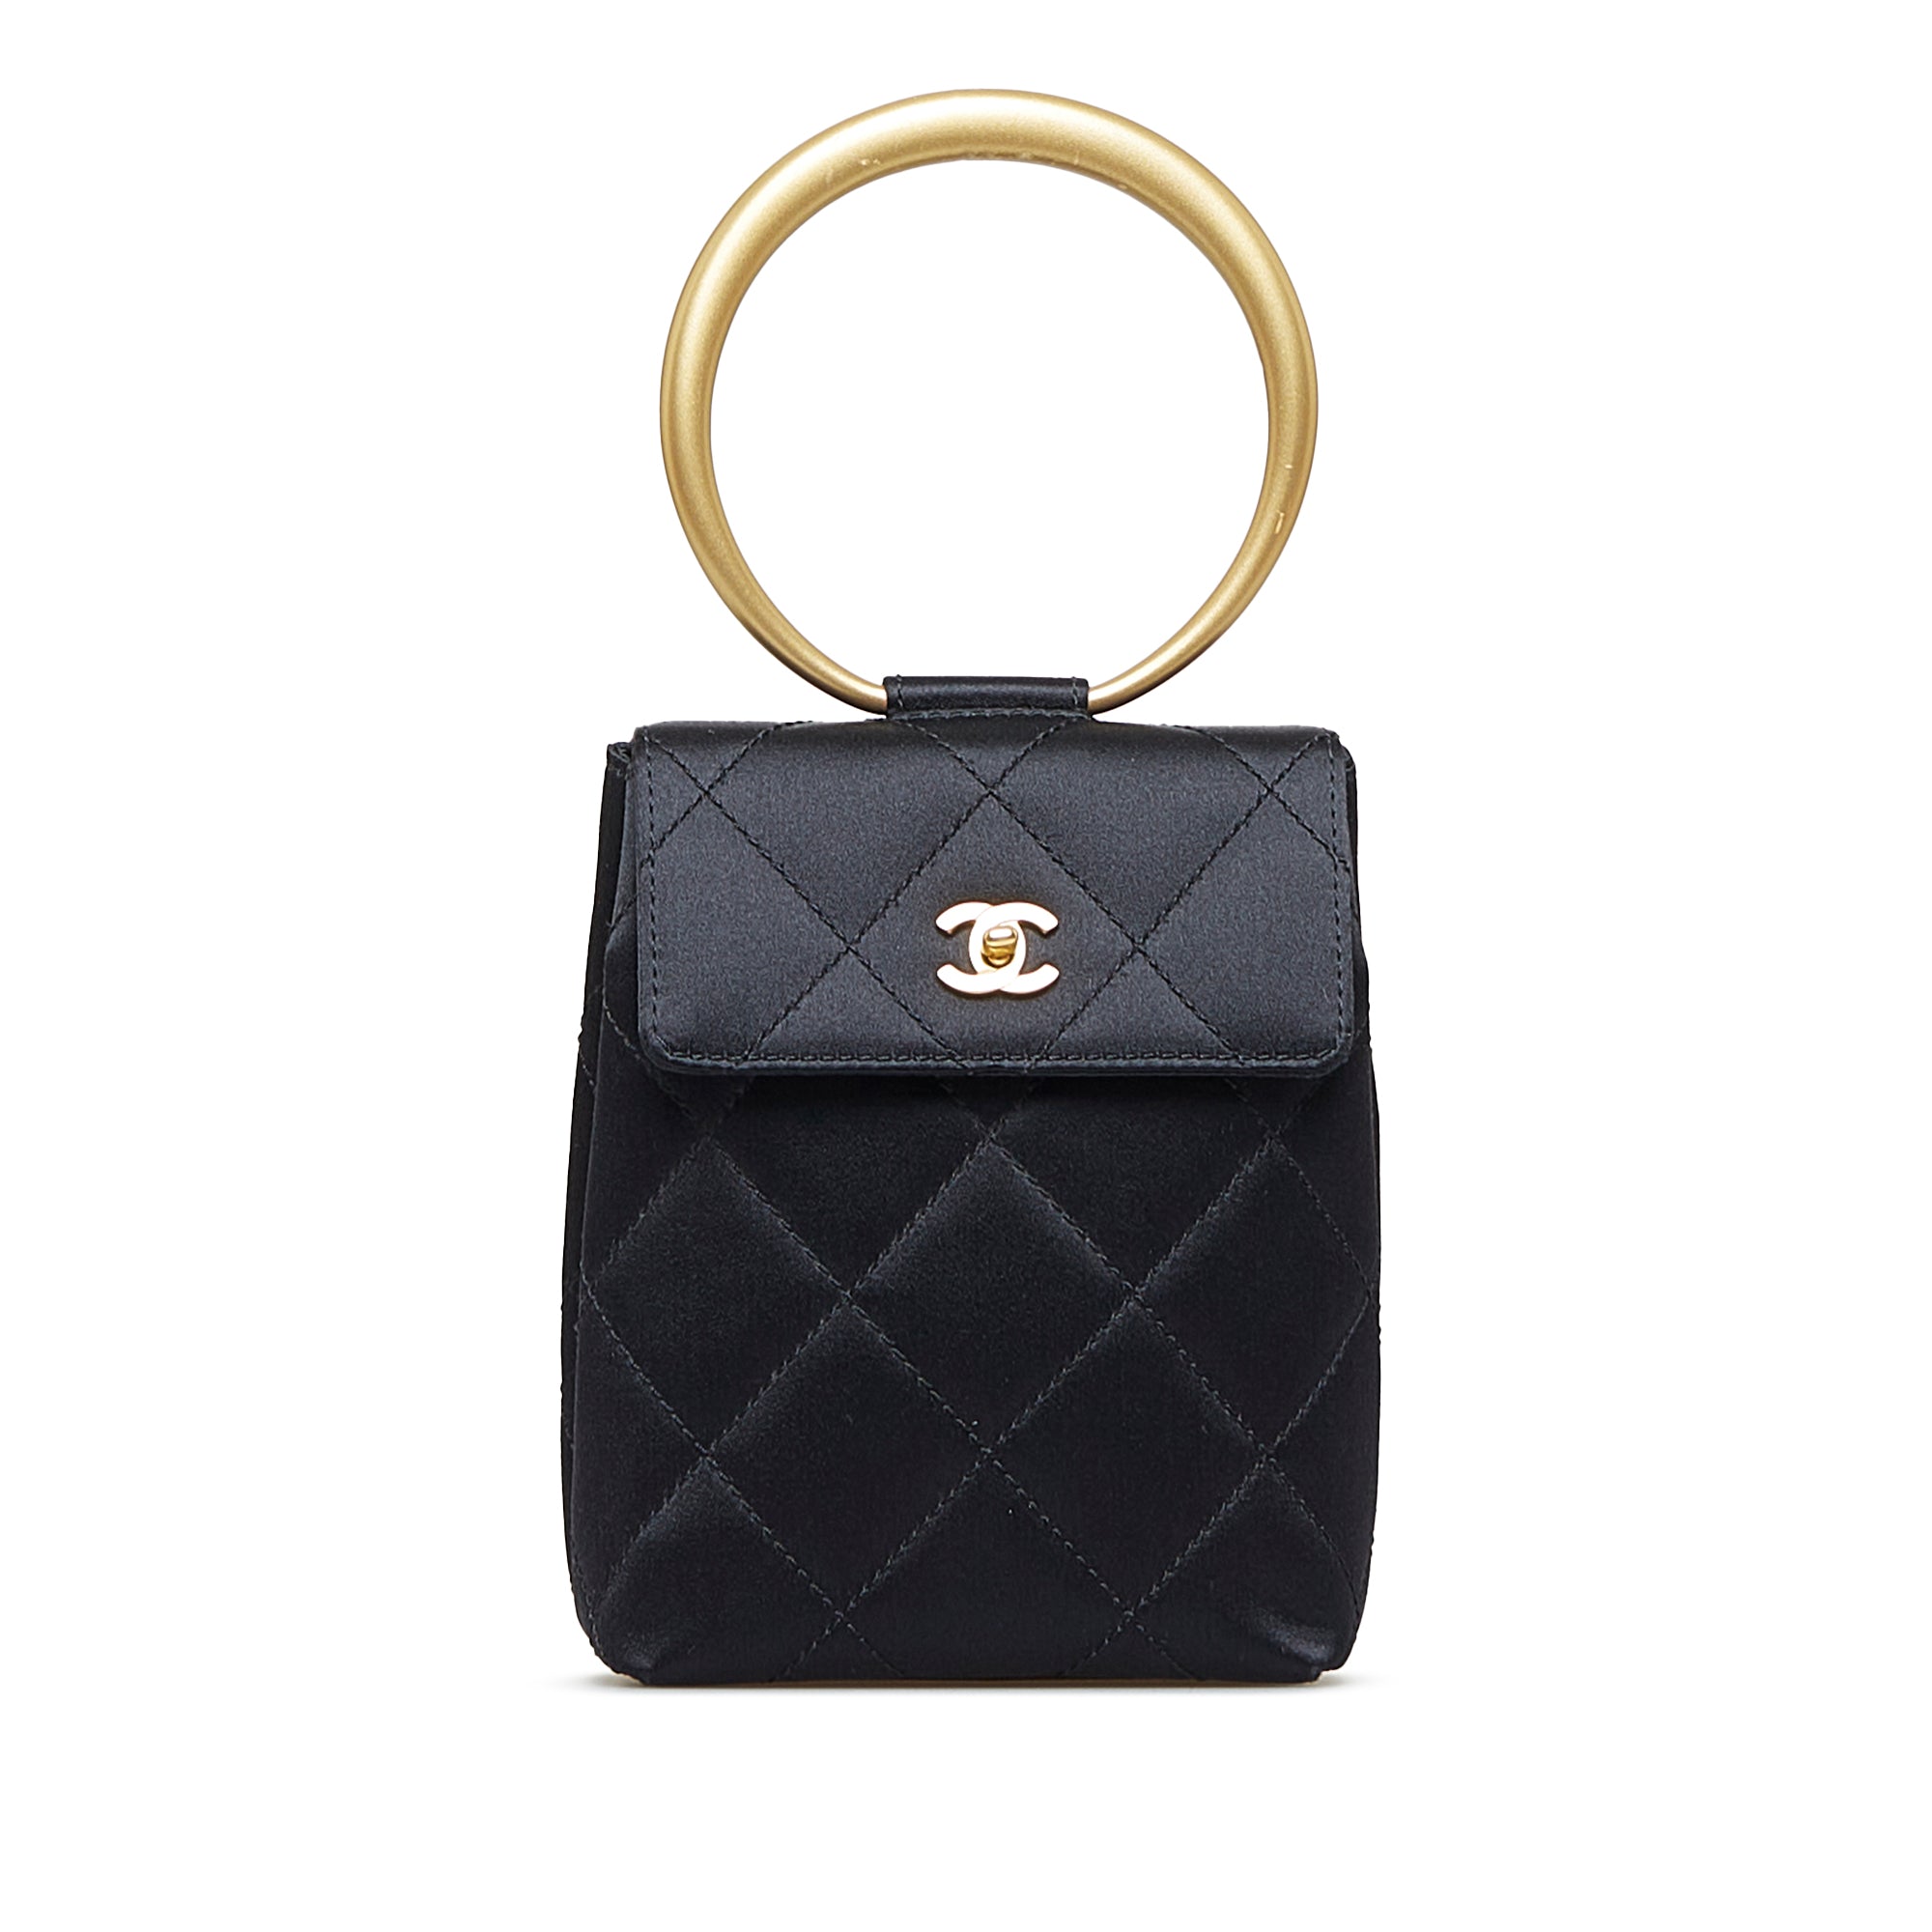 Chanel Women's Handbags - Bags